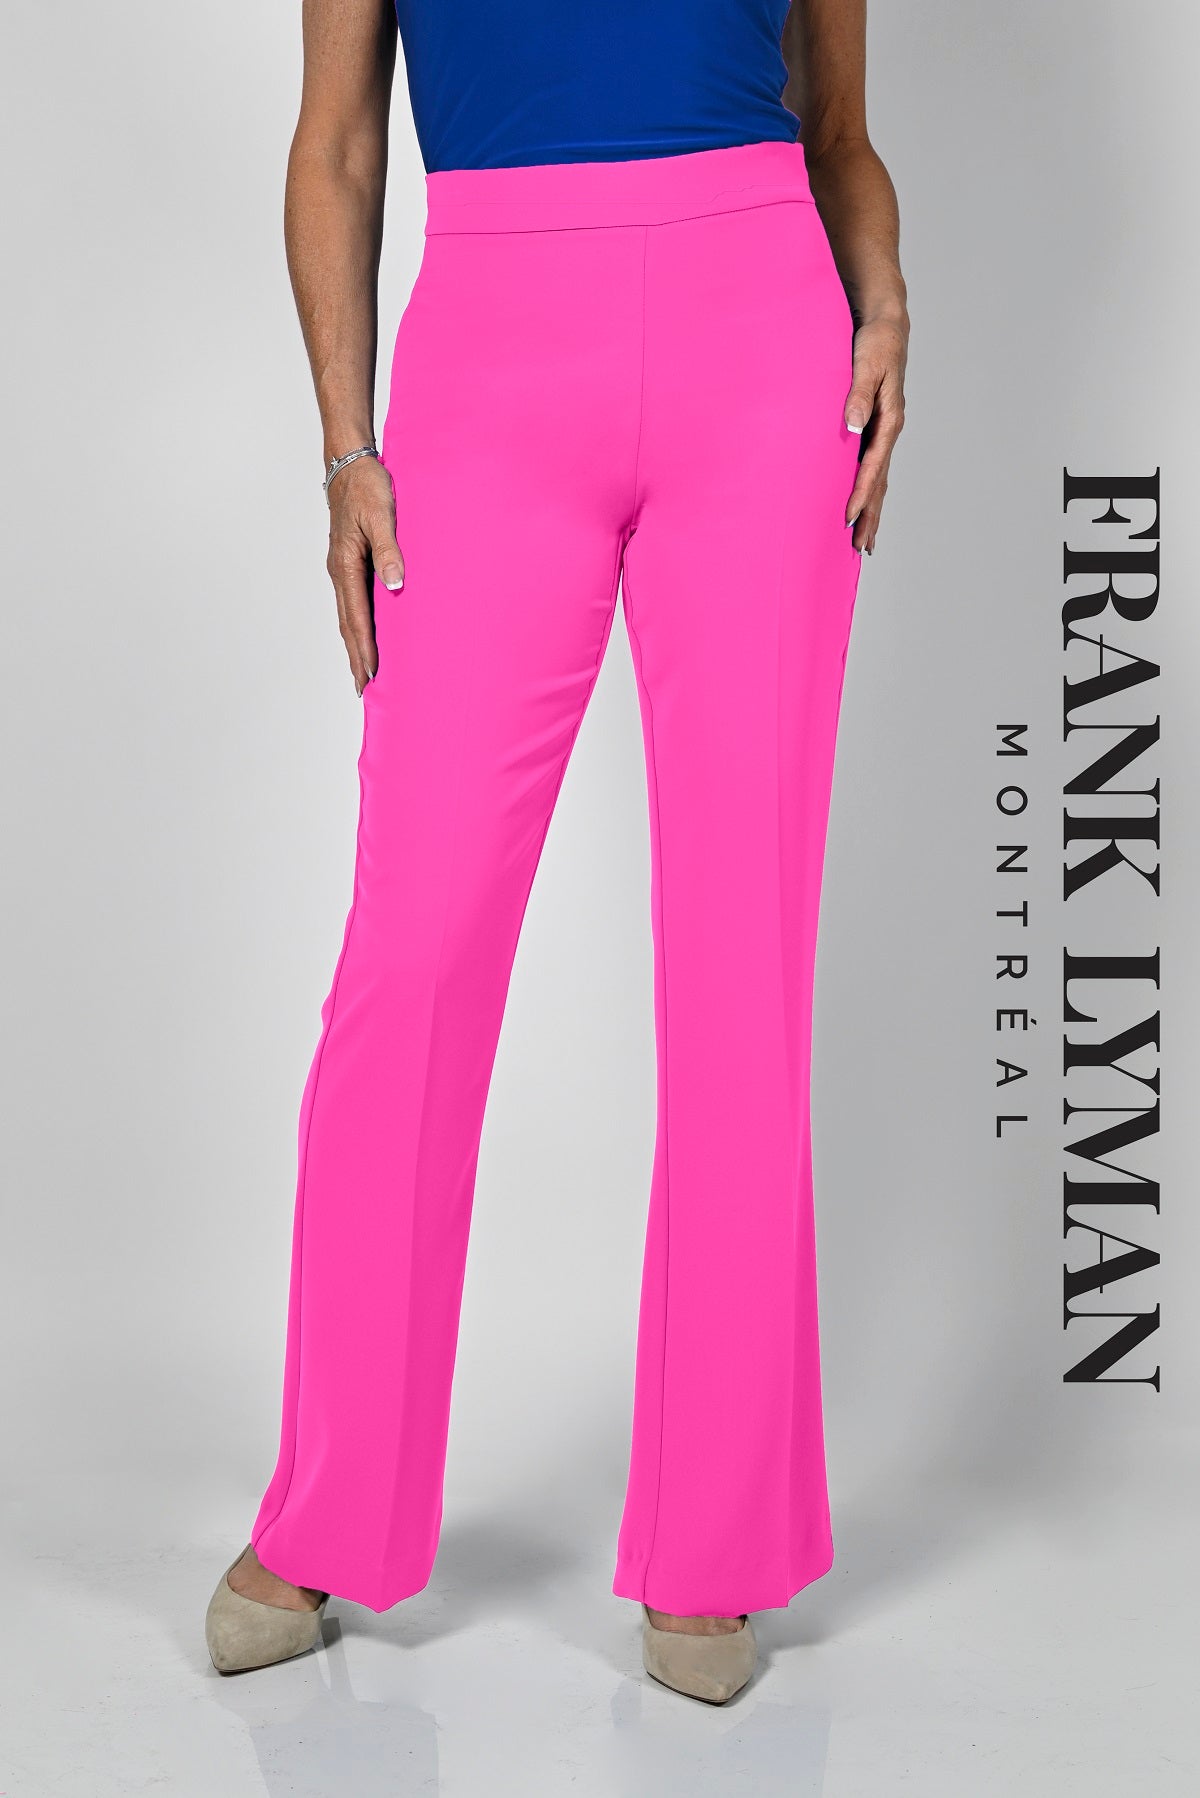 Frank Lyman Montreal Pants-Frank Lyman Montreal Pink Pant-Frank Lyman Montreal Suits-Buy Frank Lyman Montreal Clothing Online